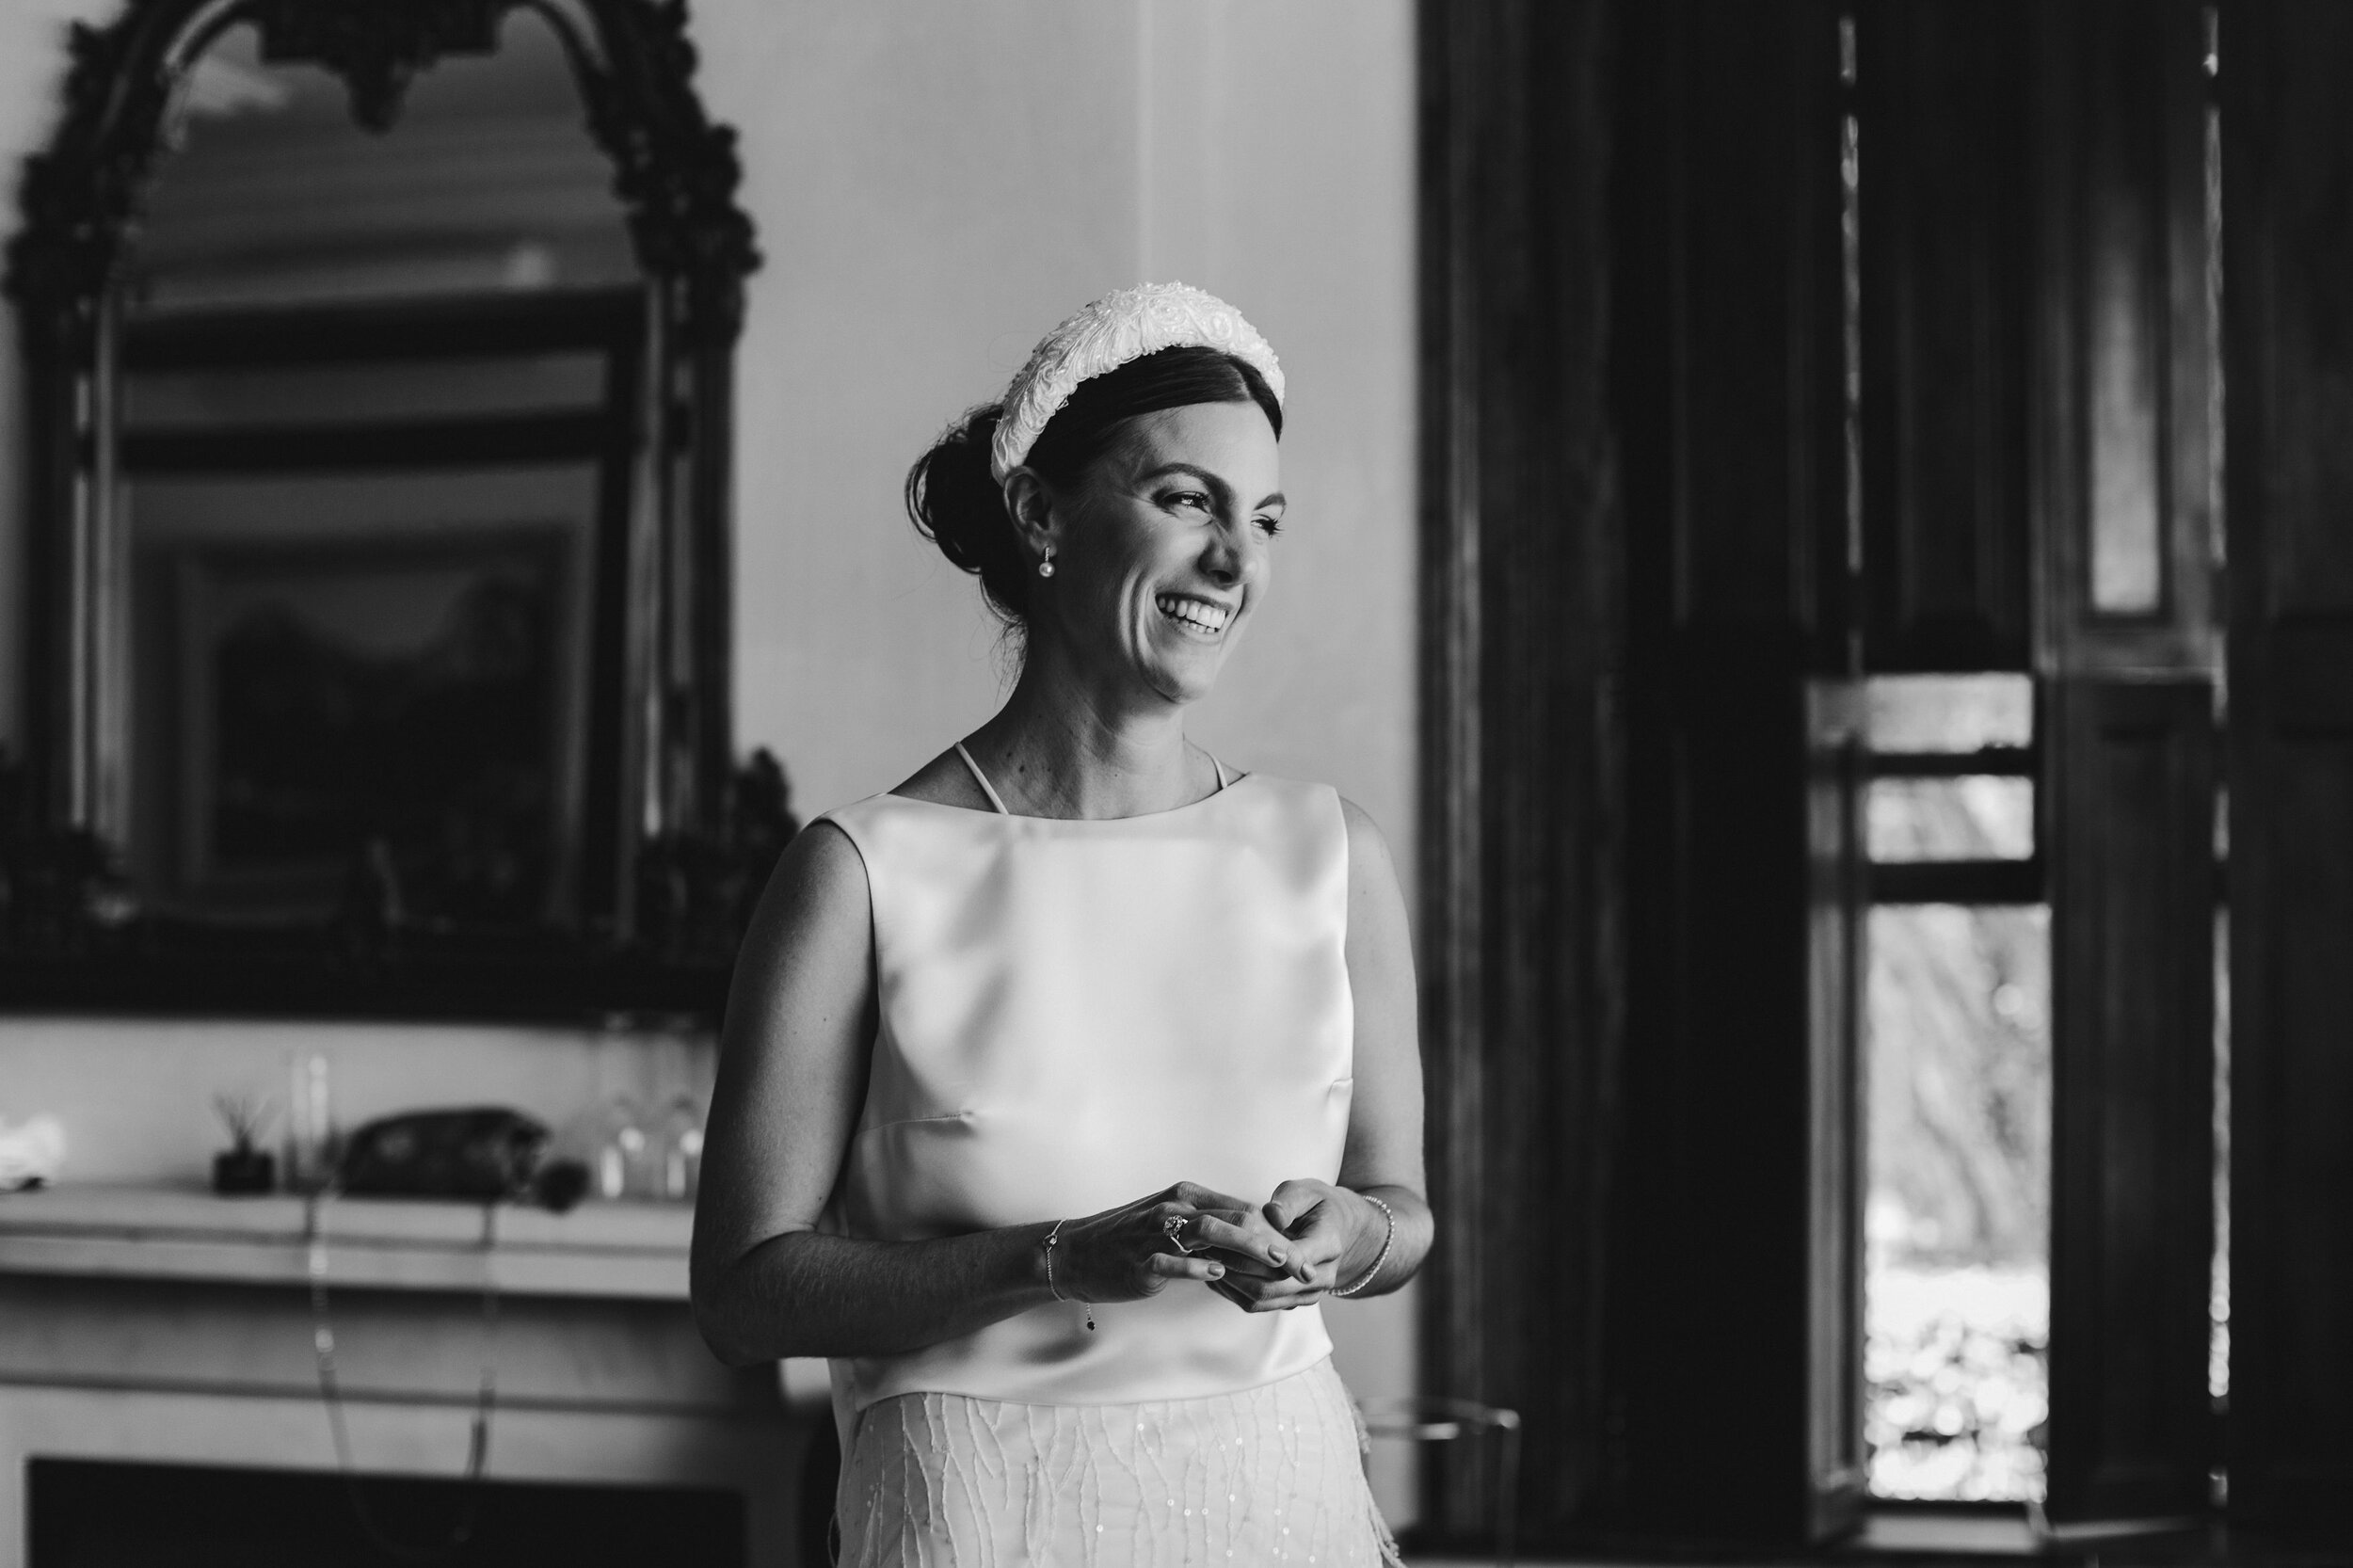 Beautiful bride Megan wore a wedding dress by Halfpenny London